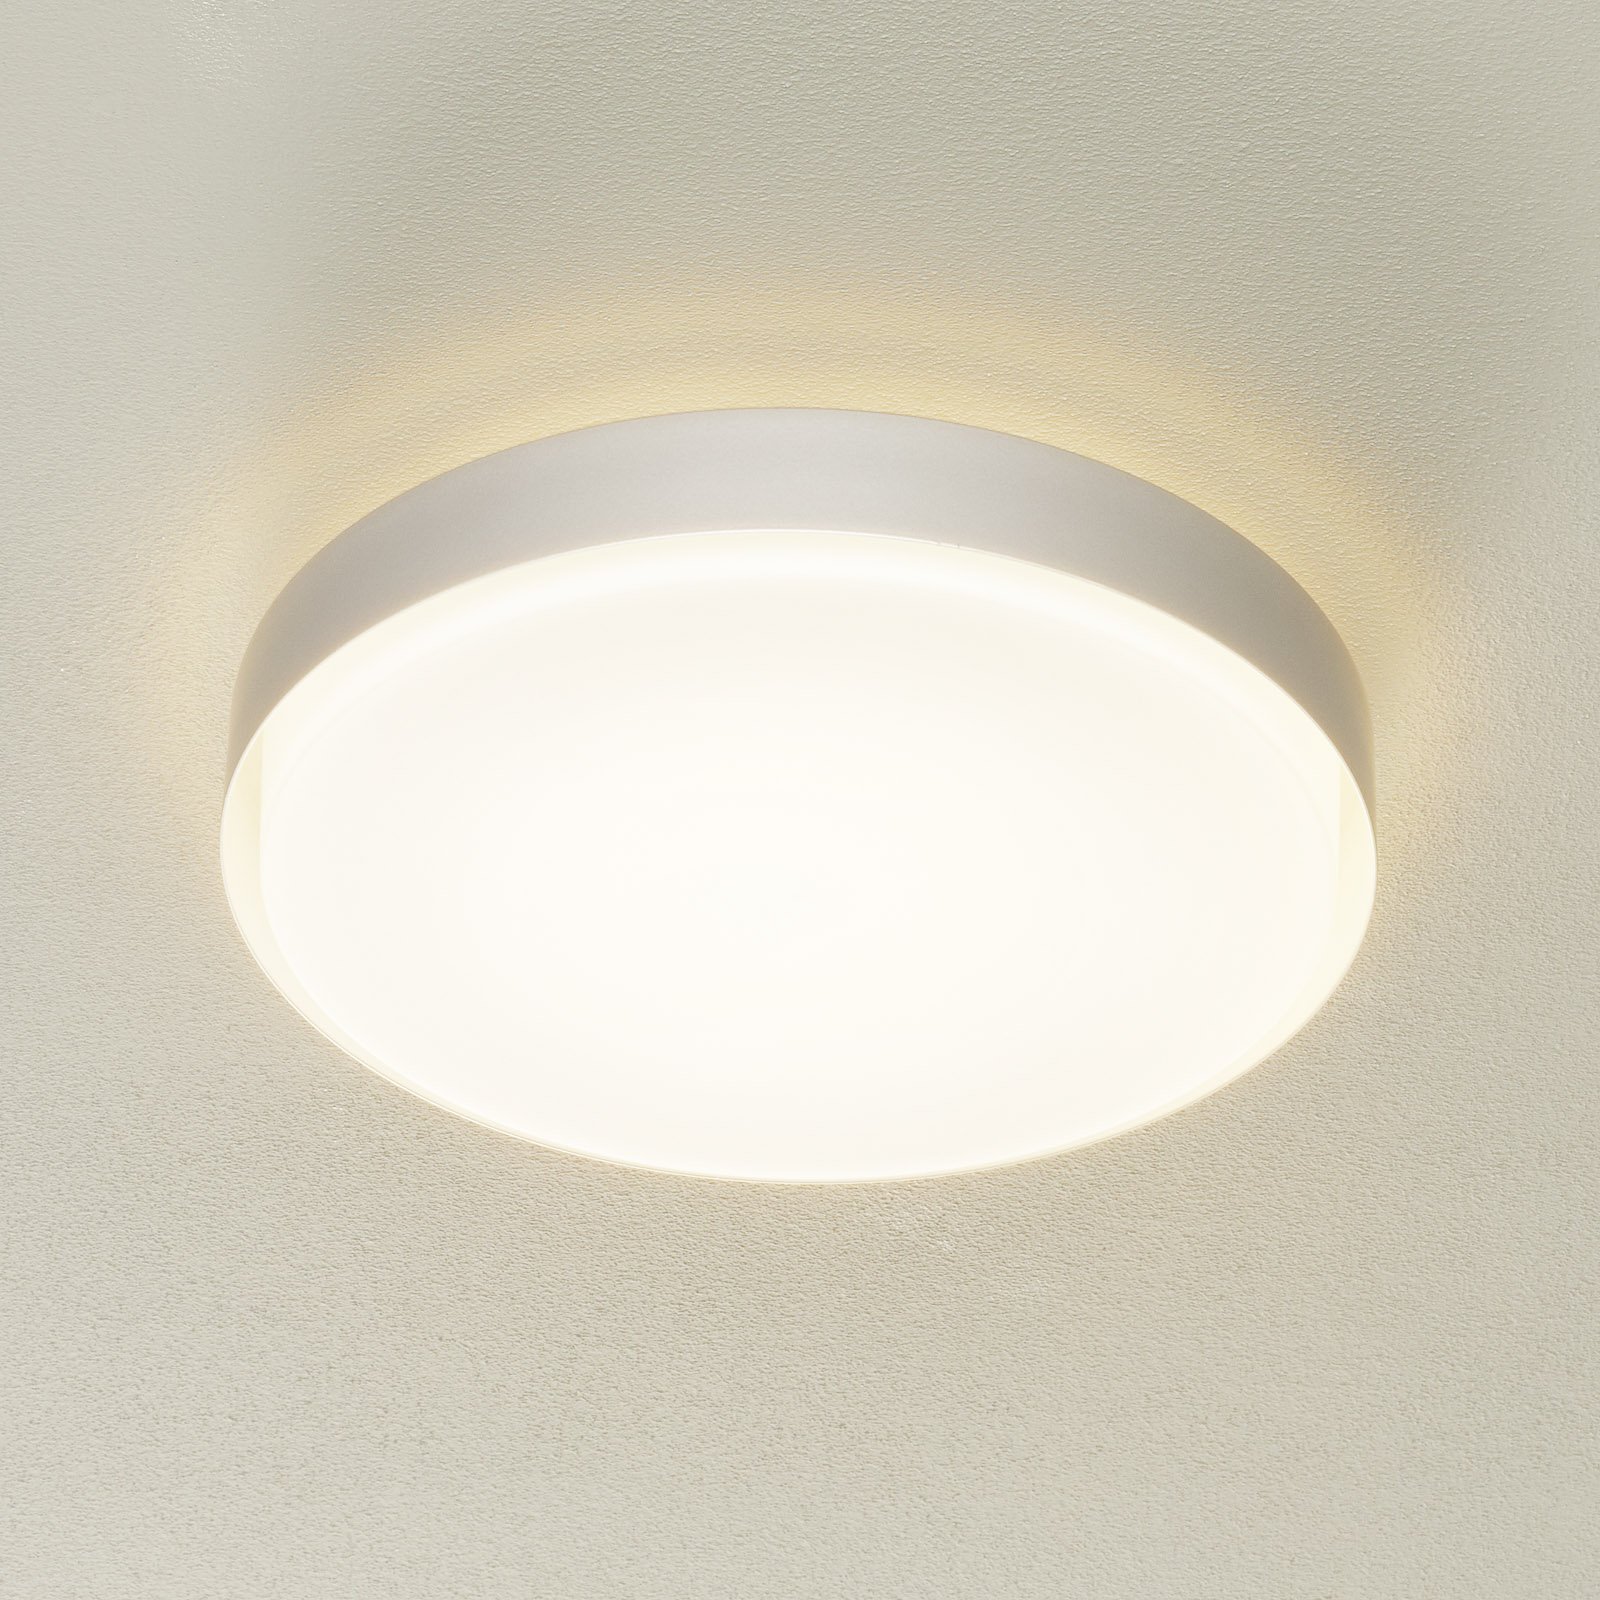 BEGA 34279 plafón LED, aluminio, Ø 42 cm, DALI